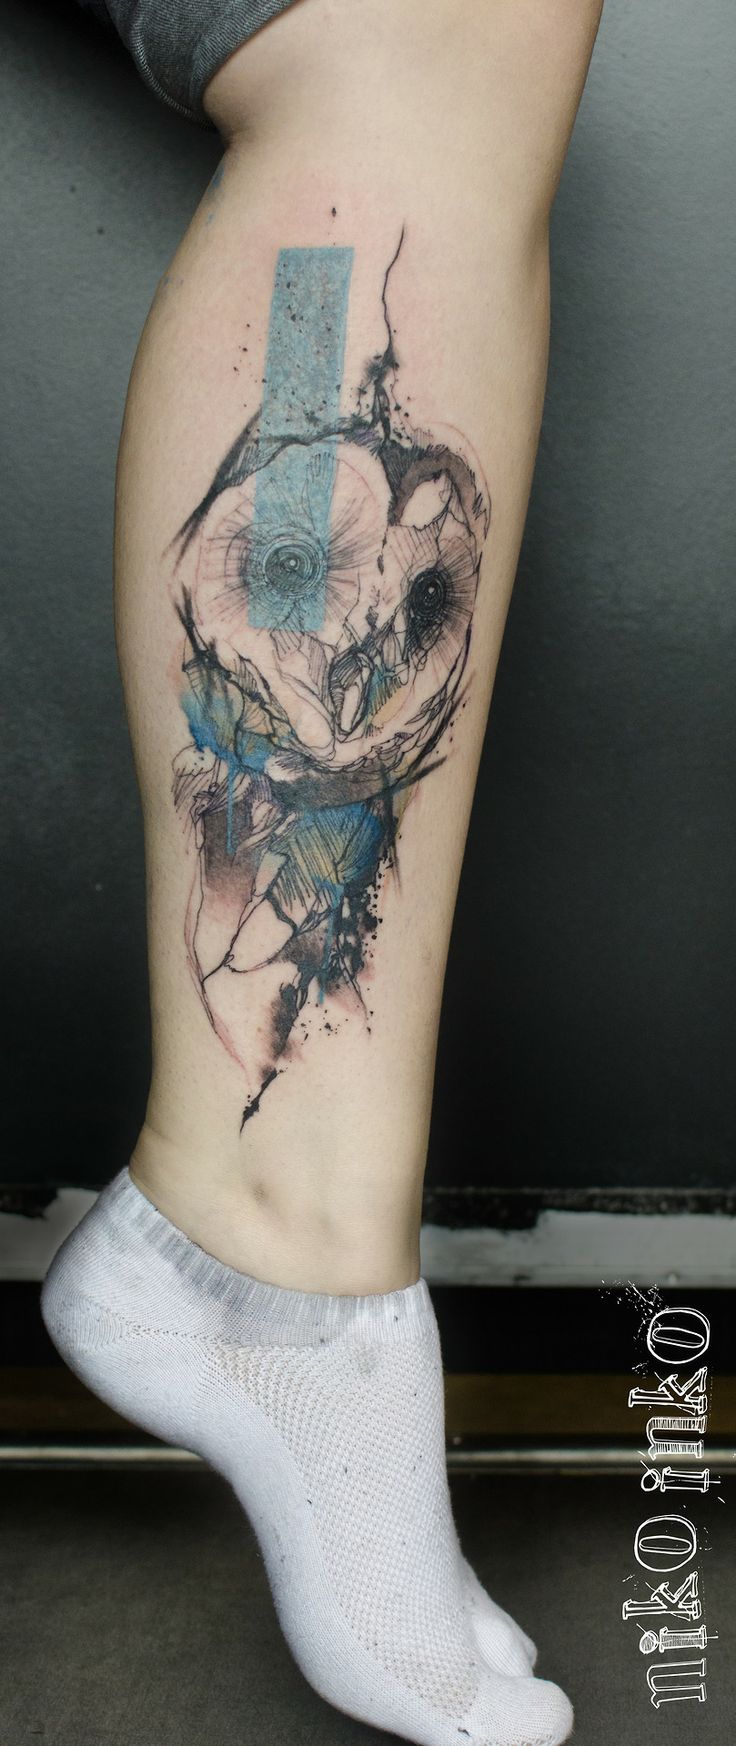 Tattoo-Watercolor-Ideas-24.